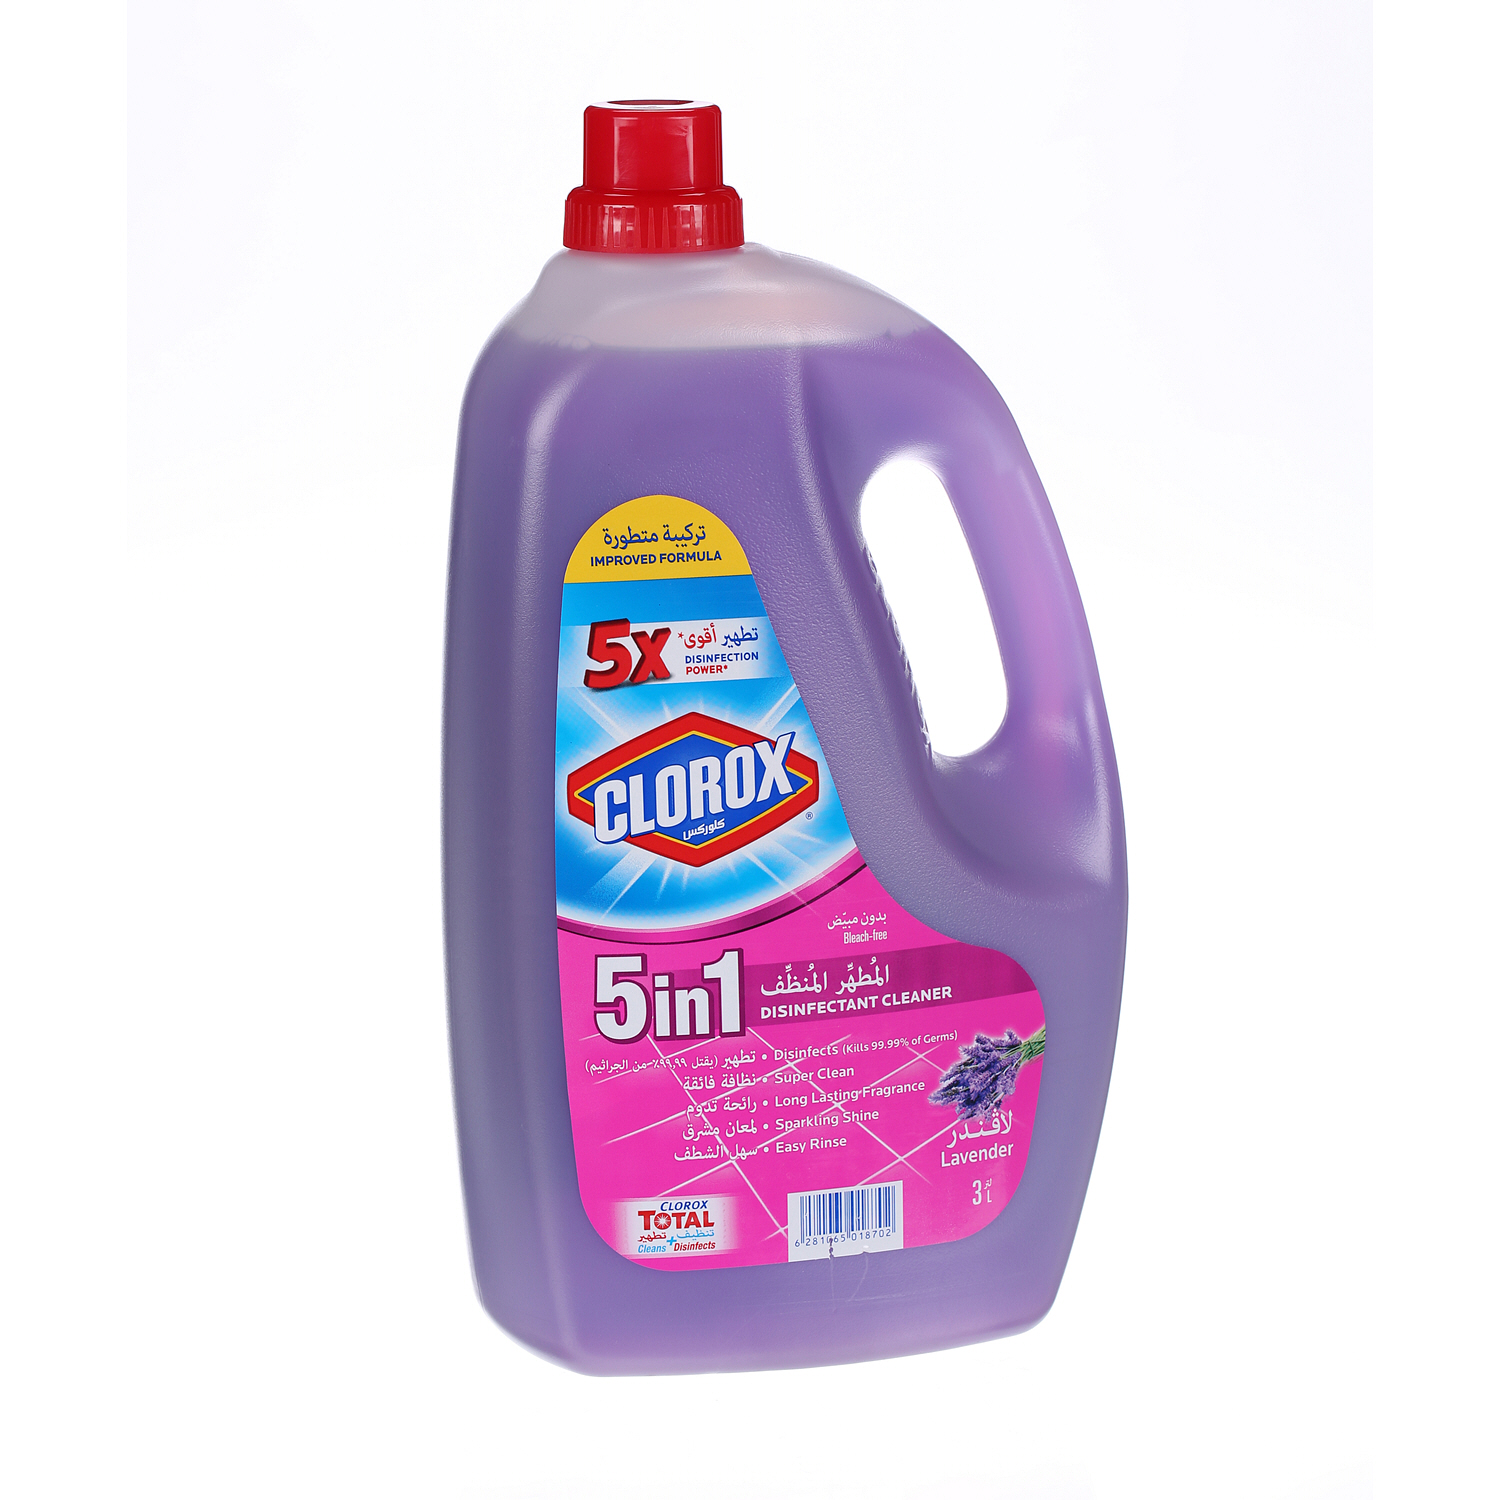 Clorox Disinfectant Cleaner non Bleach Lavender 3Ltr